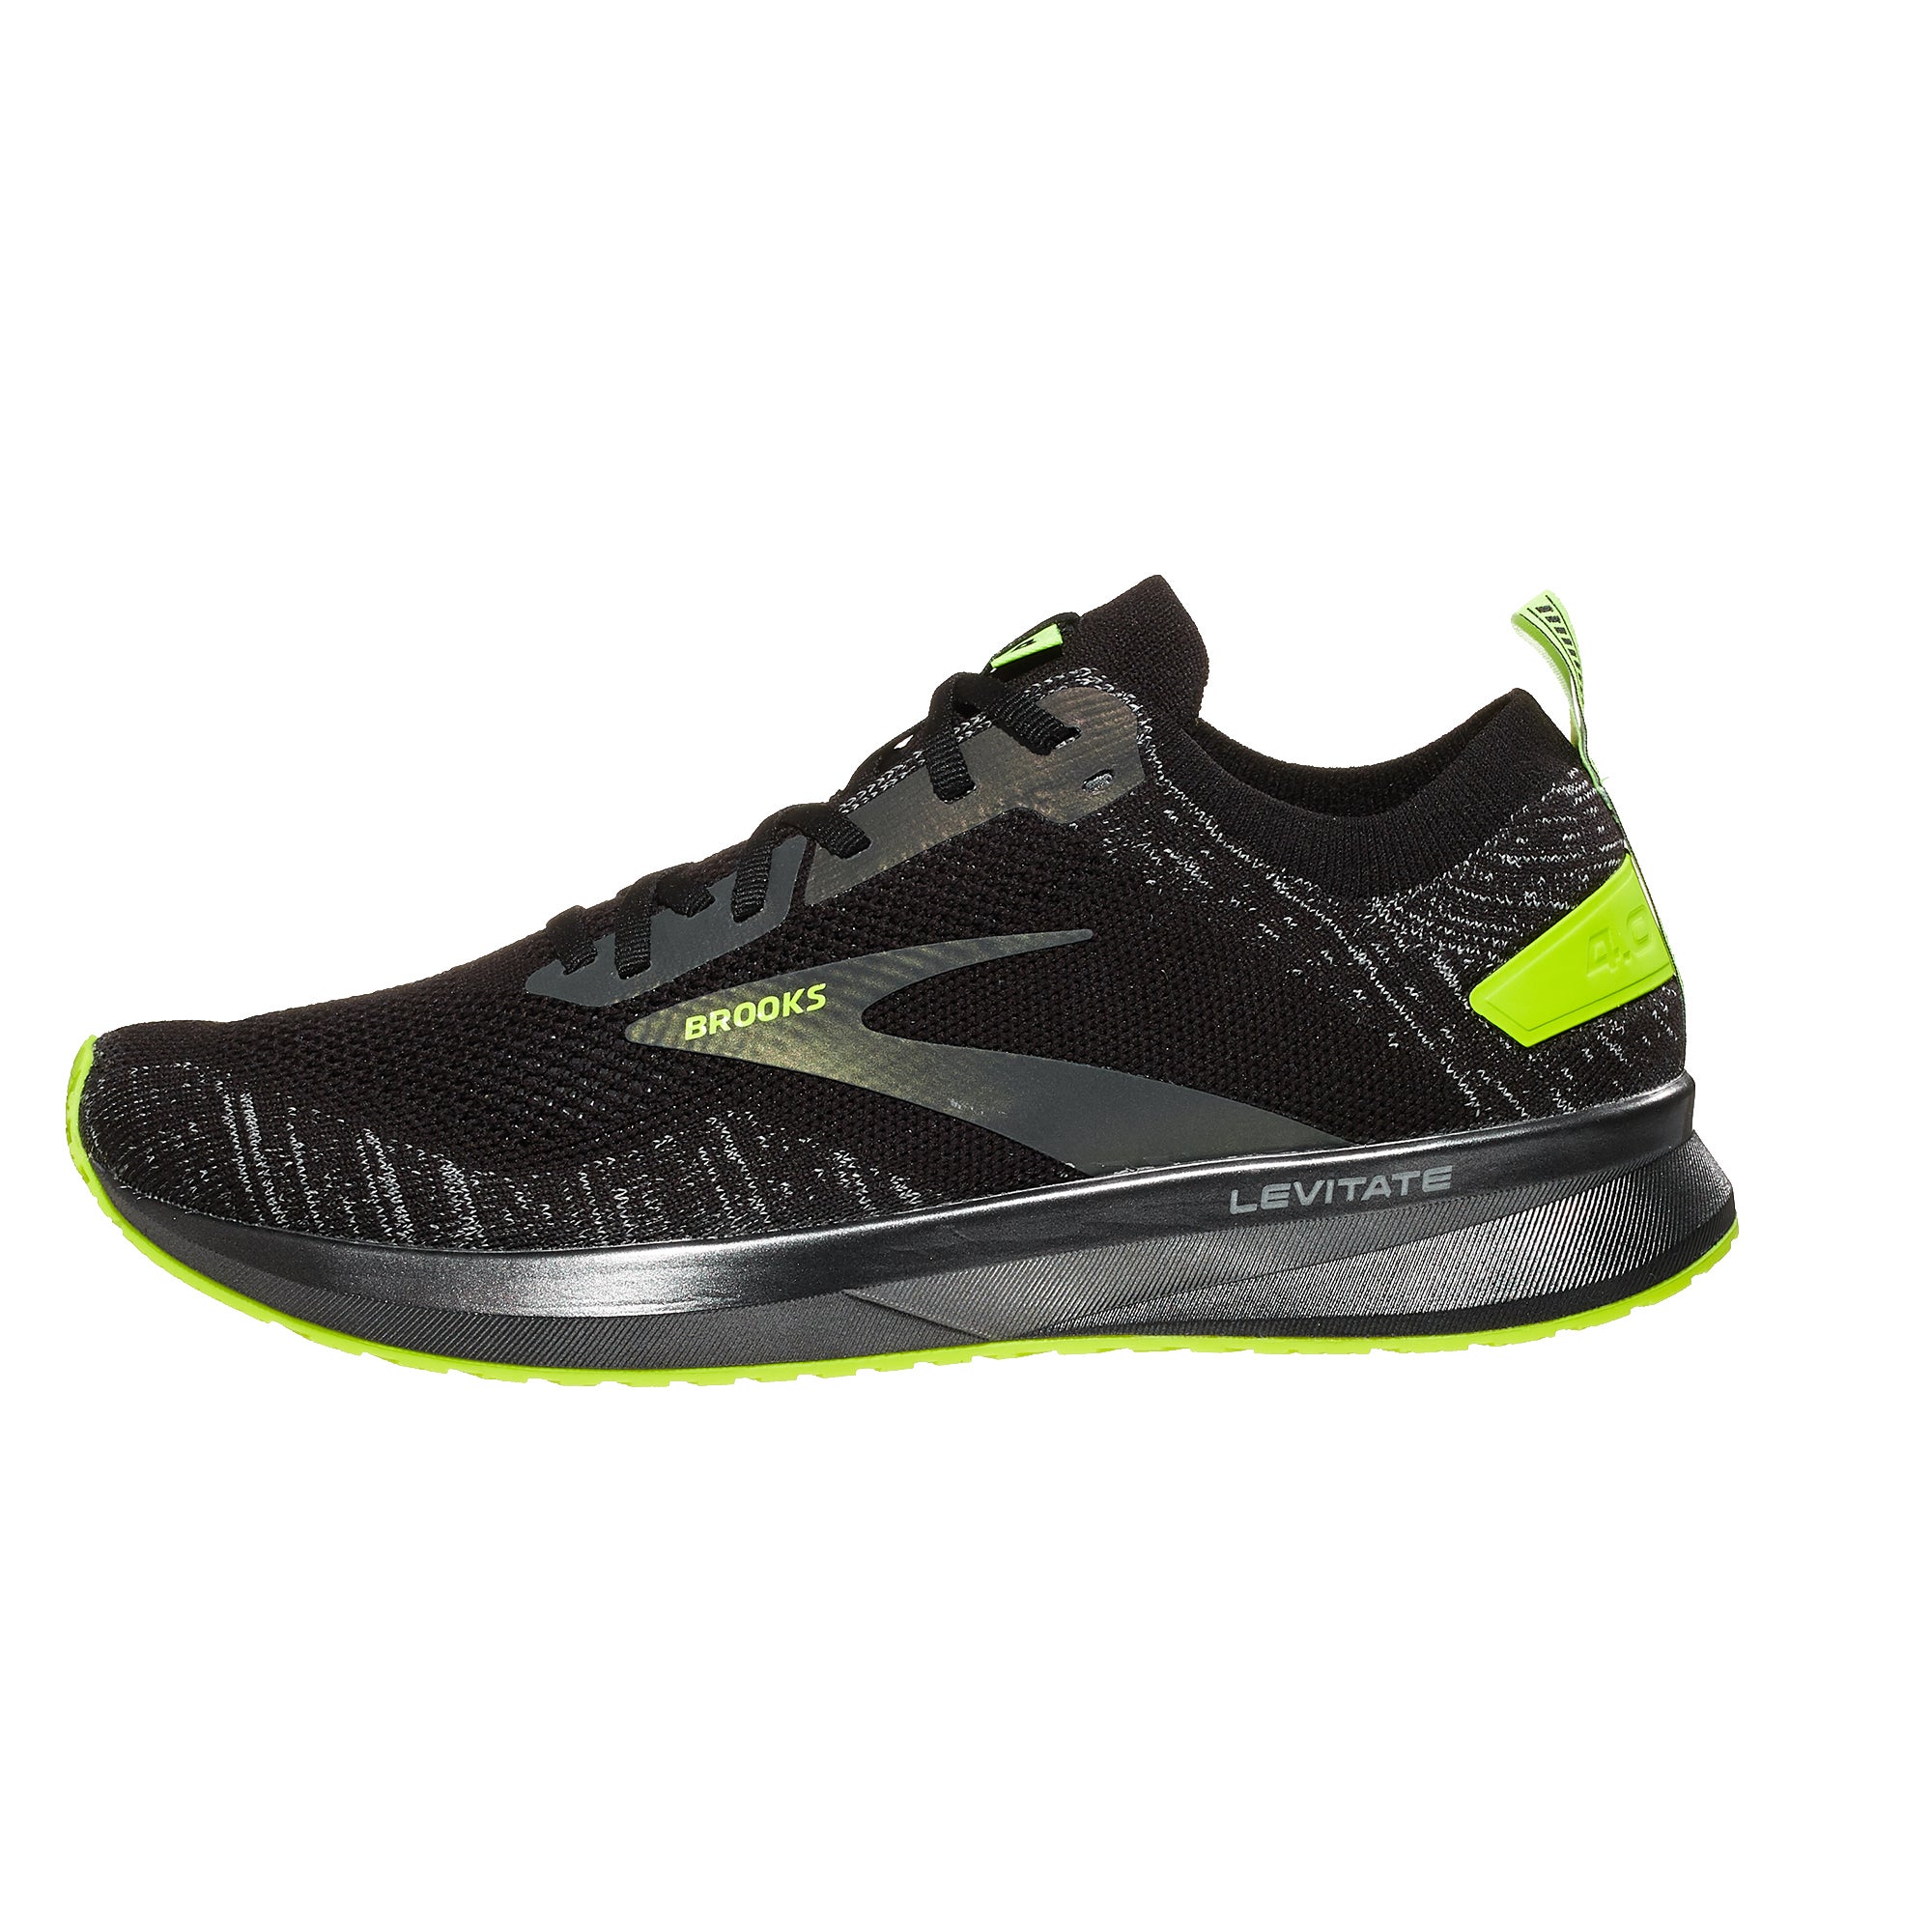 Brooks Levitate 4 Men's Shoes Run Visible Black 360° View | Running ...